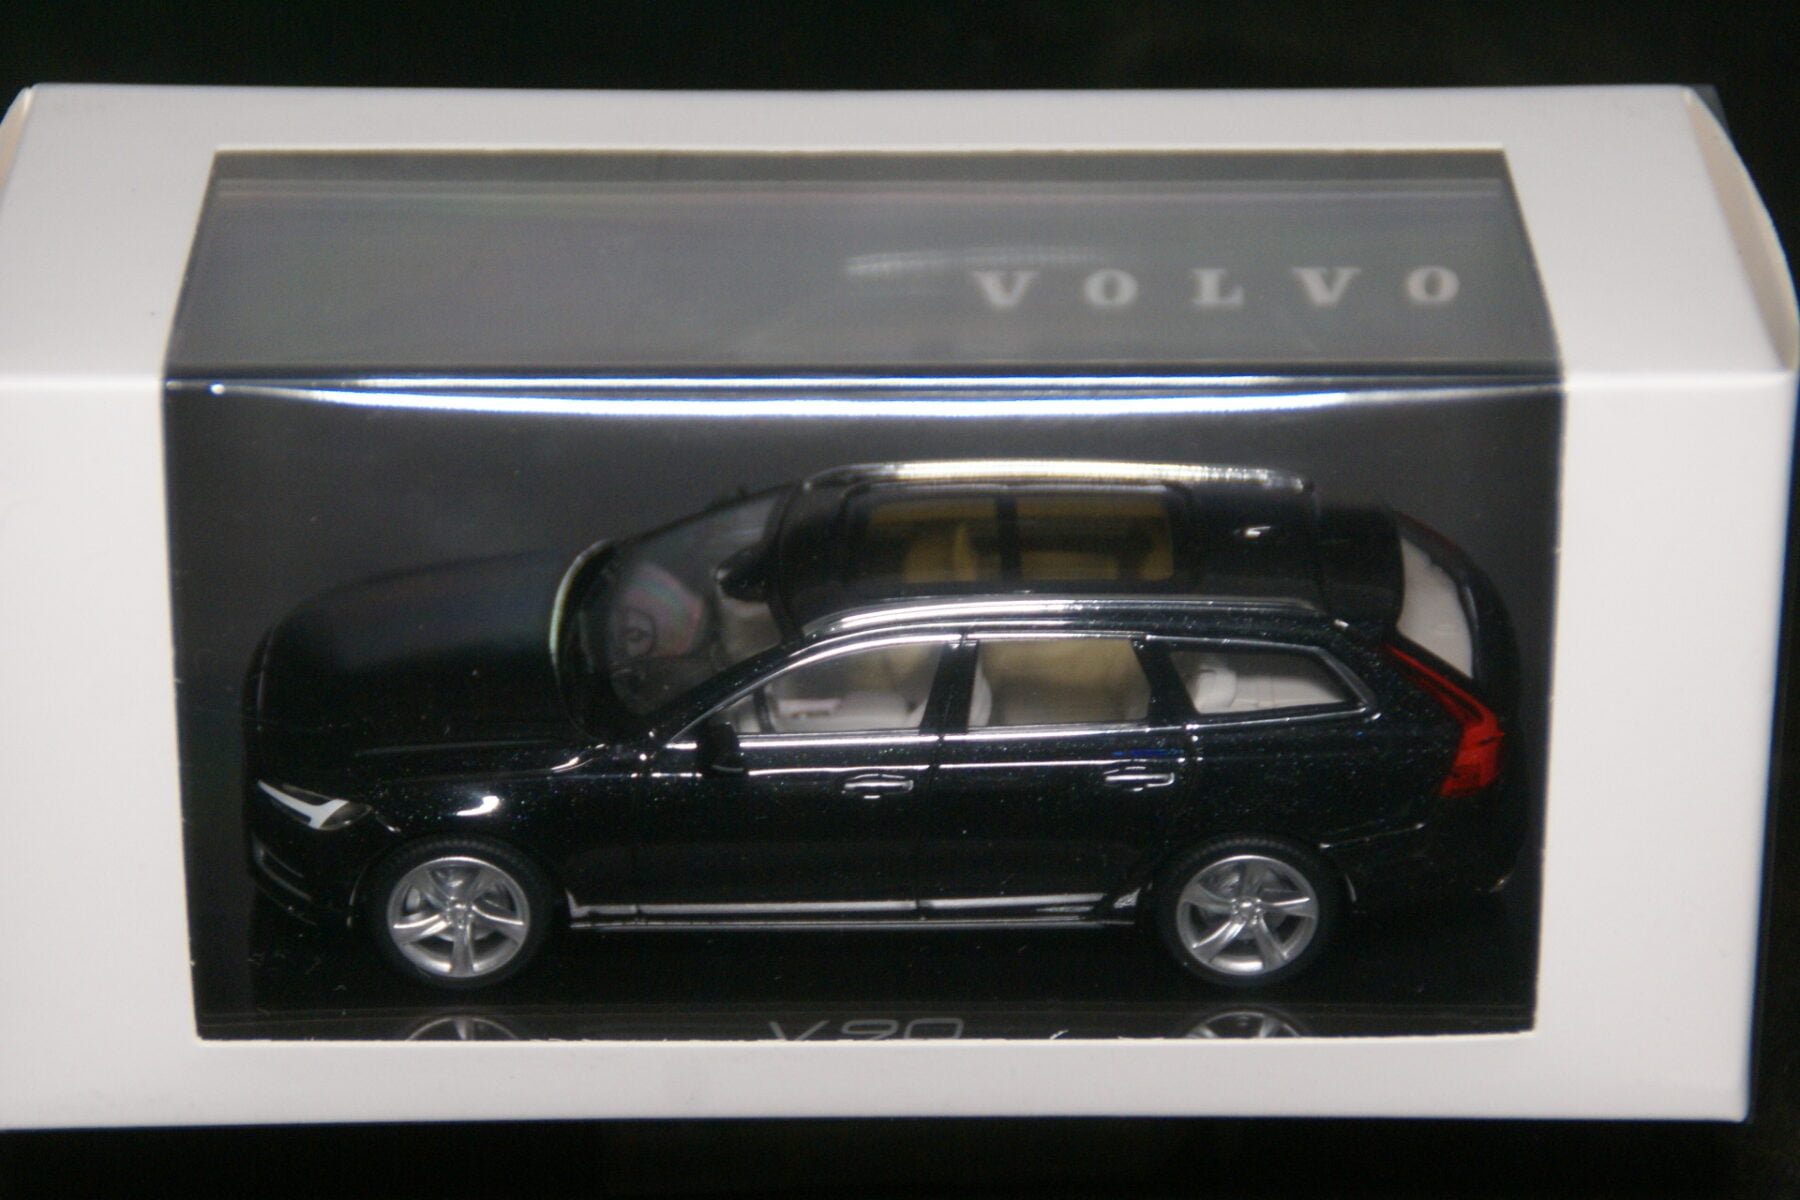 DSC09612 2020 miniatuur Volvo V90 onyx zwart 1op43 Norev nr 2300542 MB-2025b905